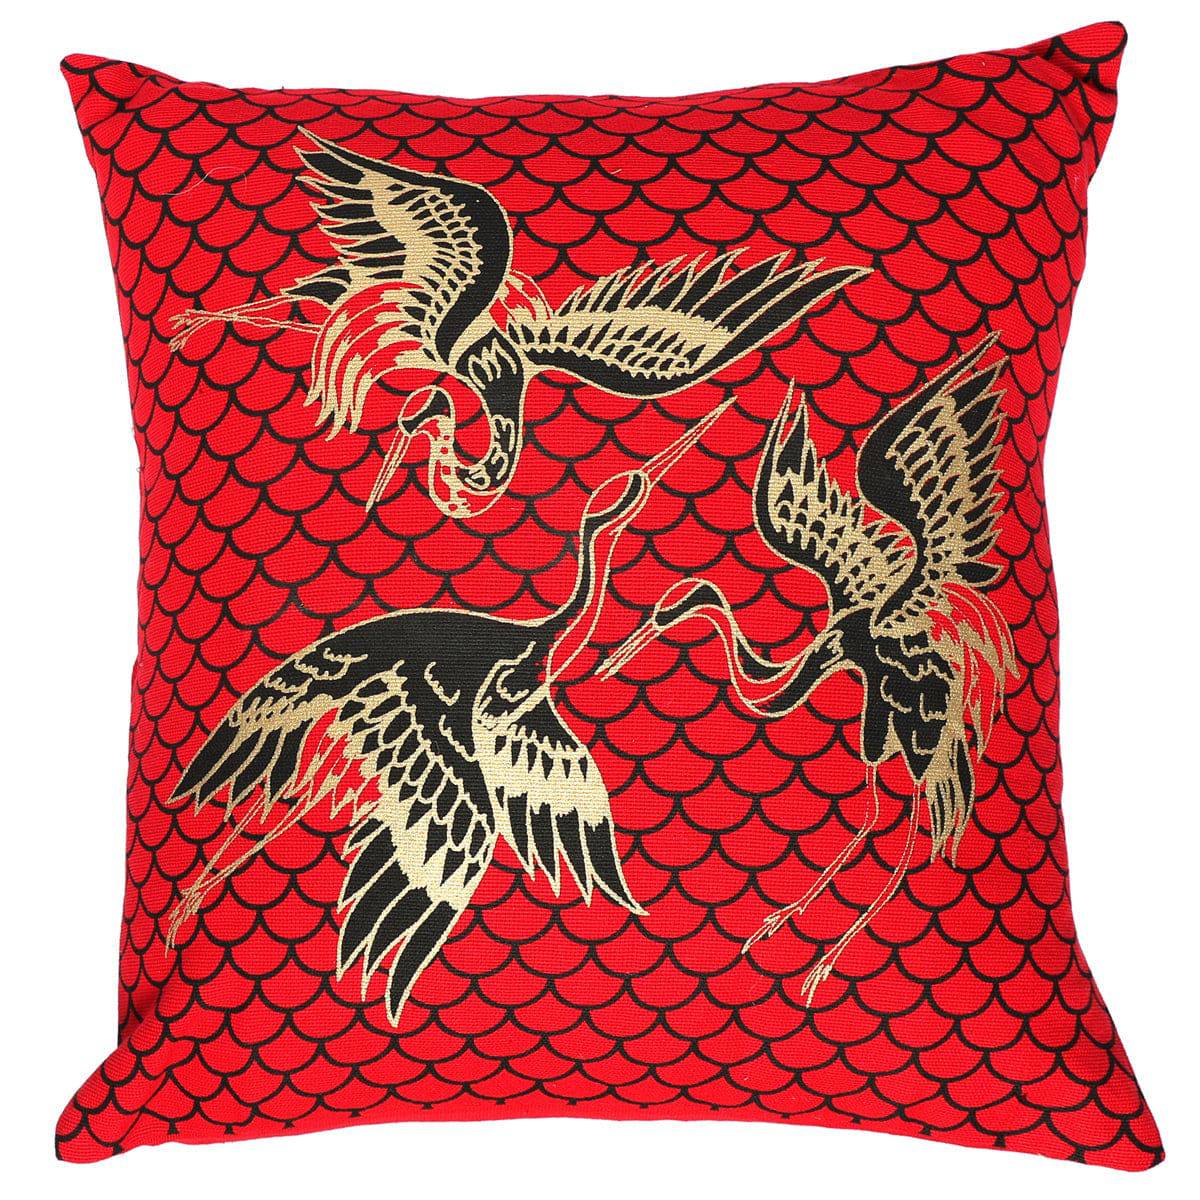 Swan Daze Cushion Cover 16x16 Red